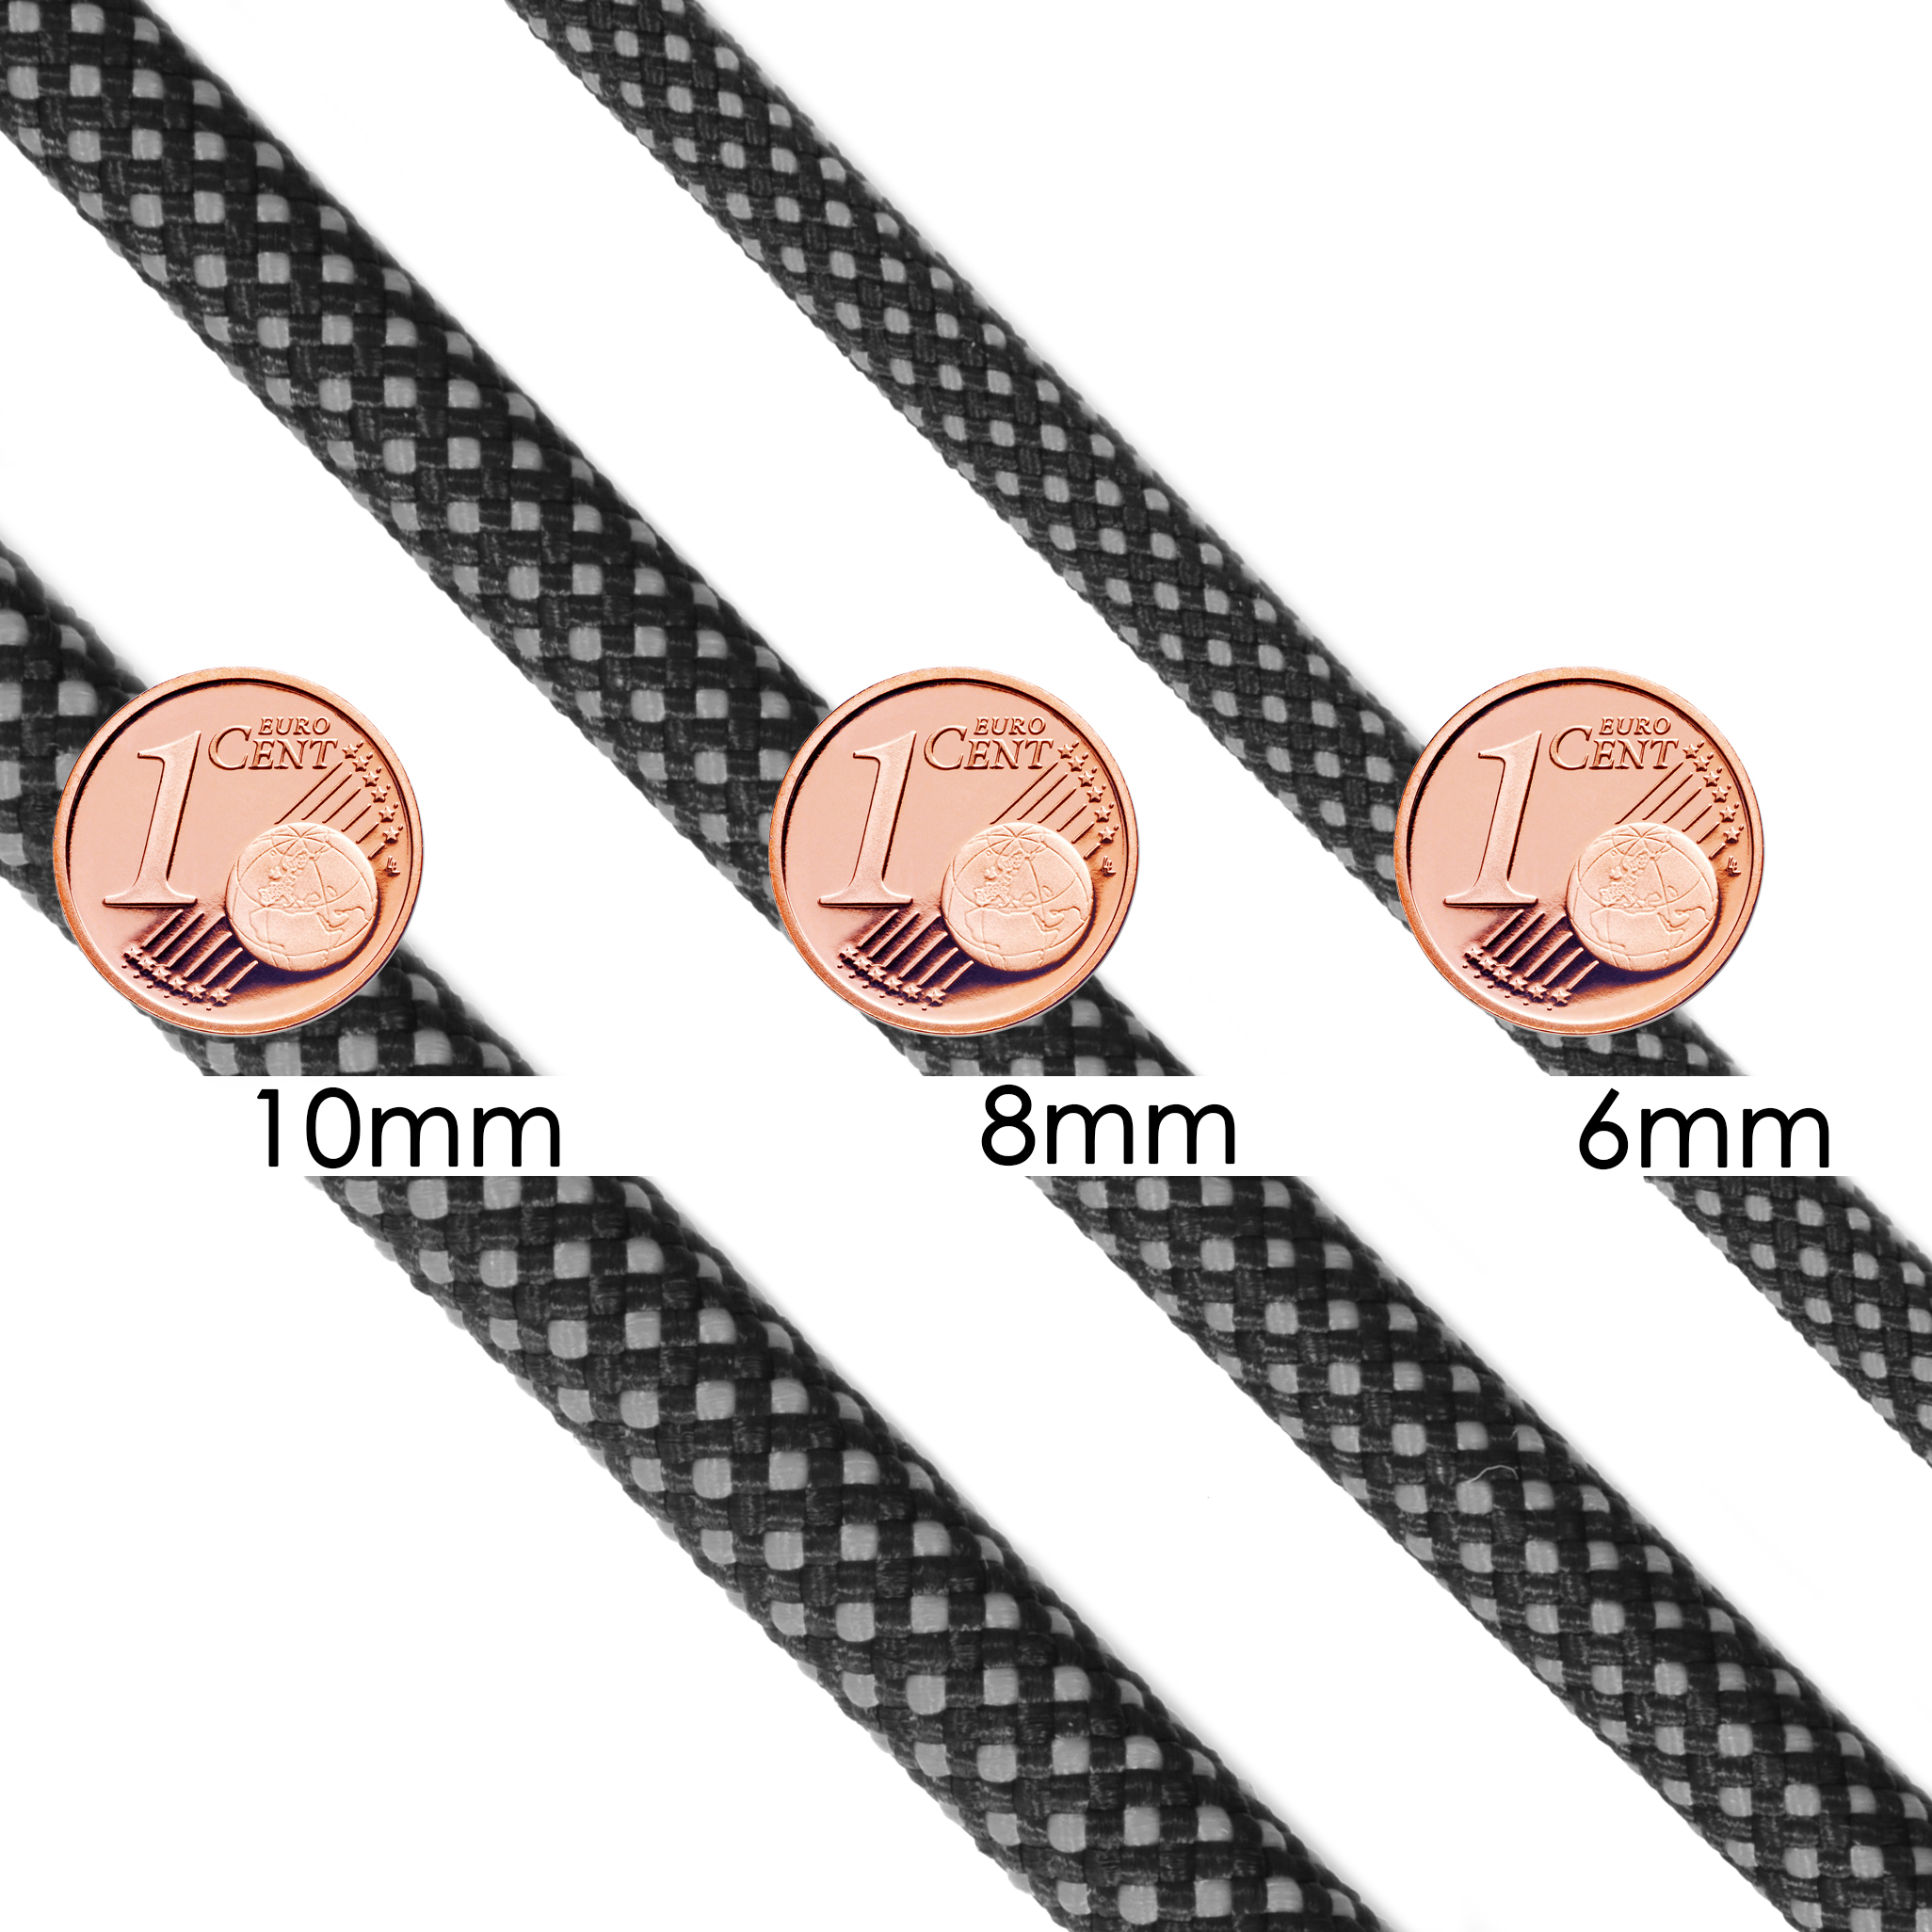 PPM Seil Premium Grün-Türkis, 6mm